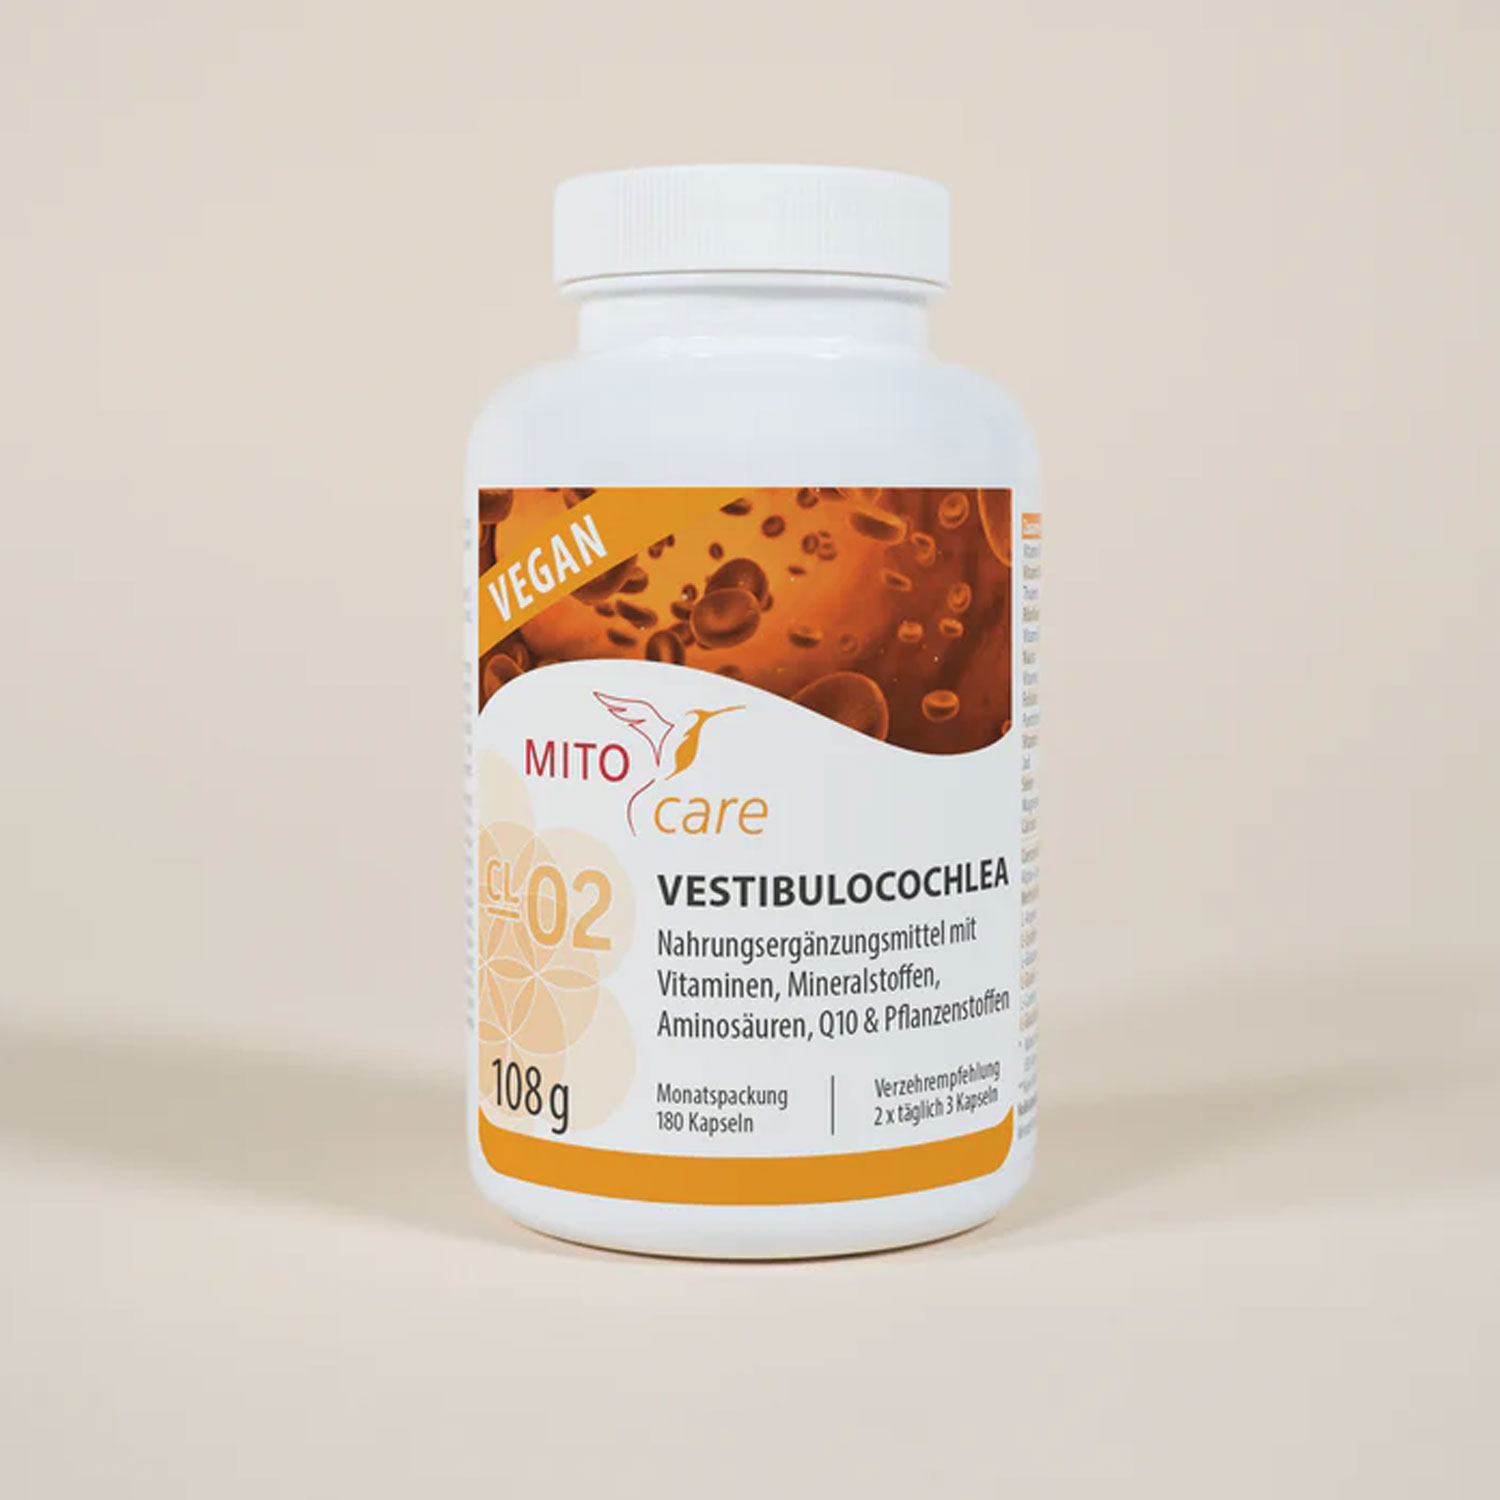 MITOcare® Vestibulochochlea - Dose Etikett vorn